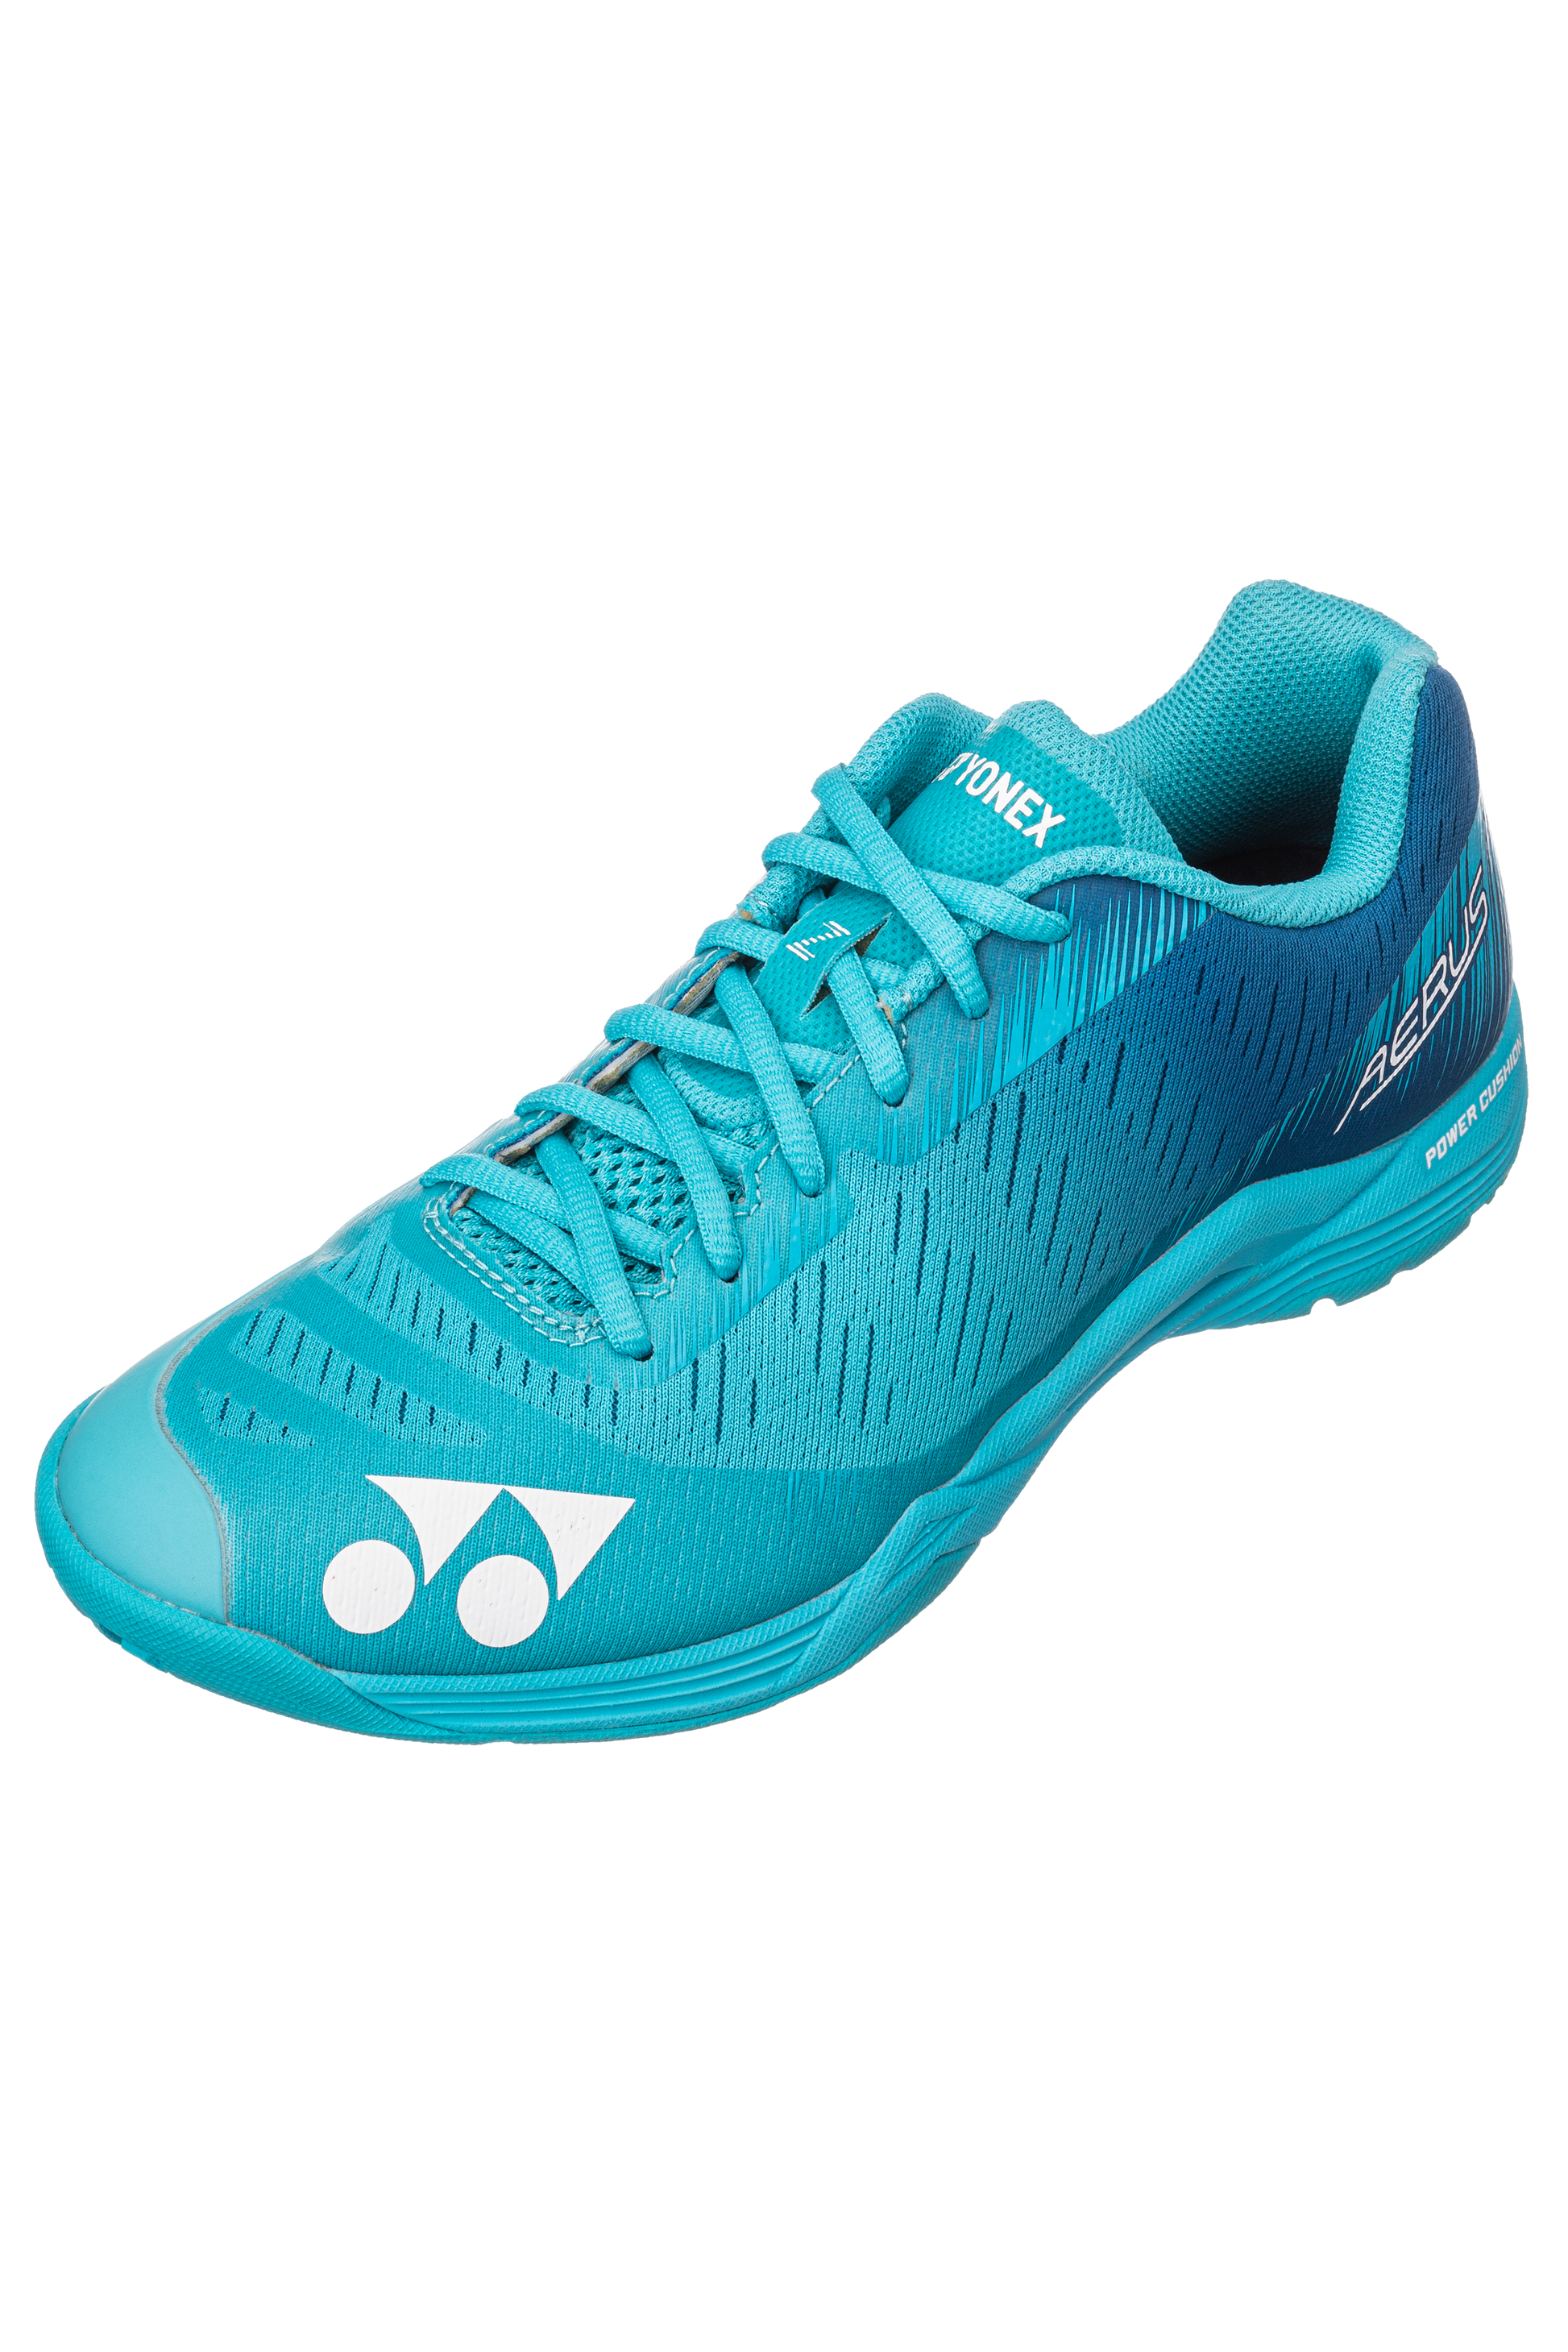 YONEX Badminton Shoes POWER CUSHION AERUS Z MENS [Mint Blue] - Max Sports